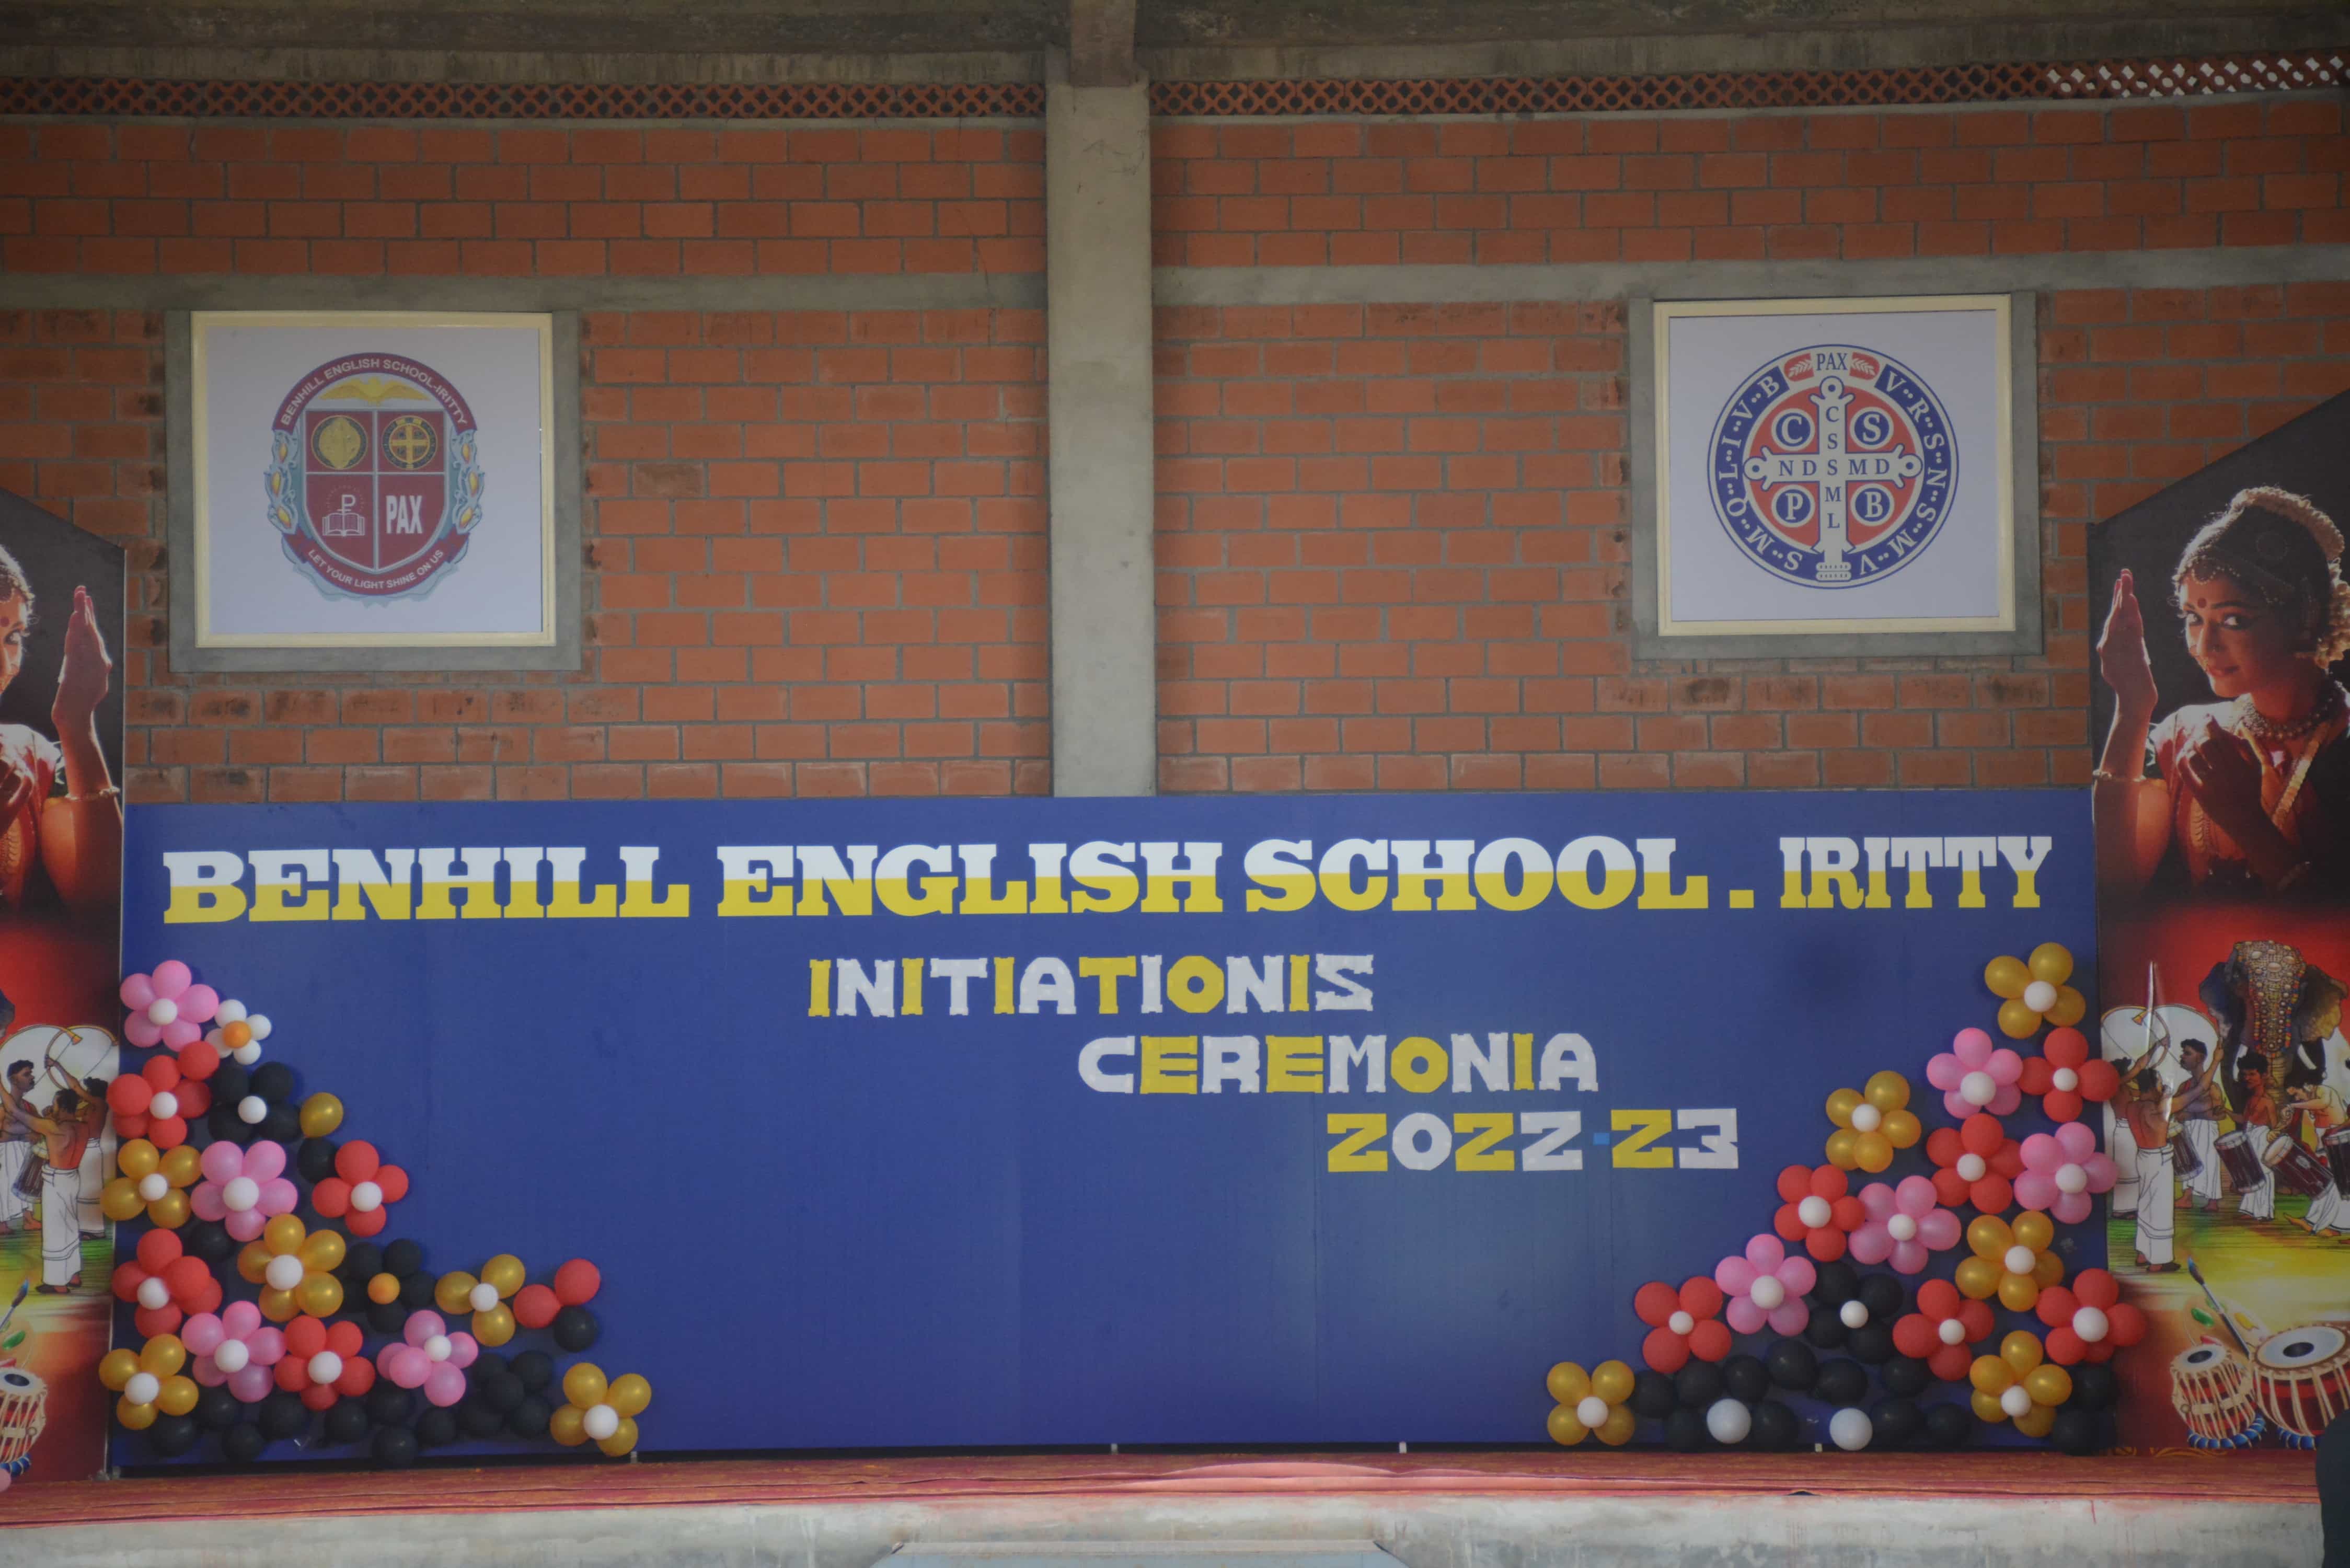 lkg initiation 2022-23 ceremony at benhill school iritty